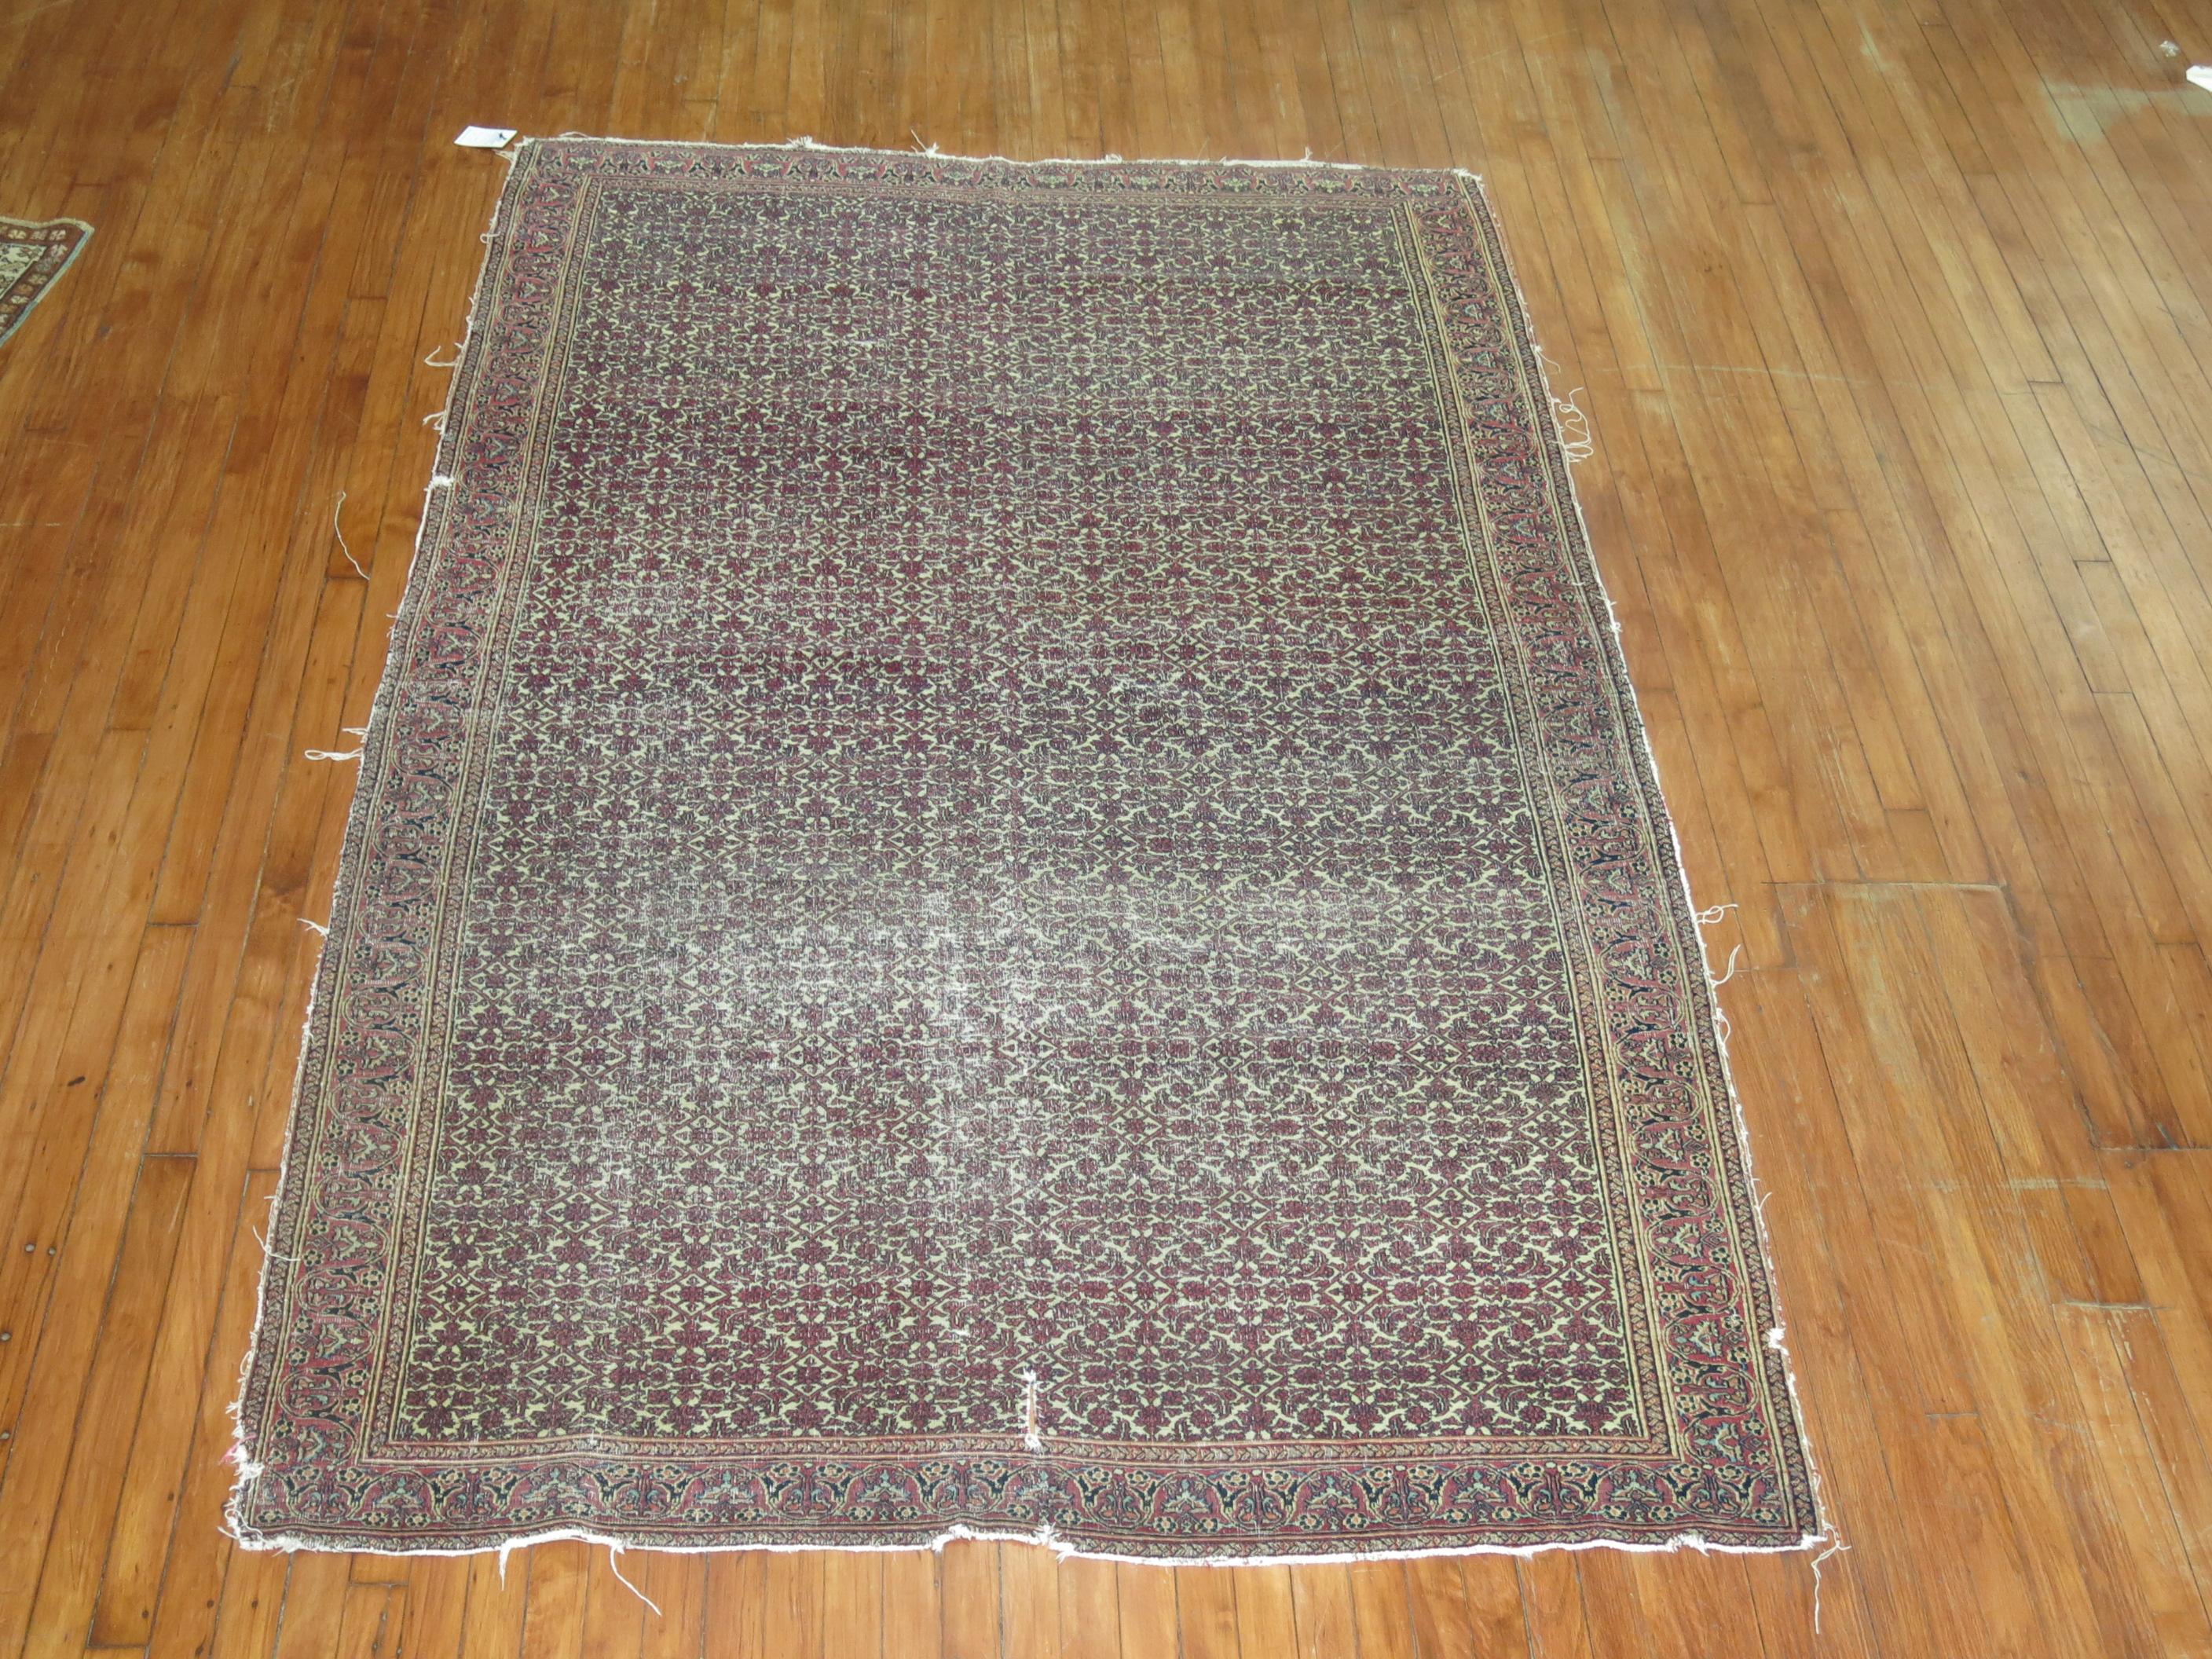 A naturally distressed Persian doroksh rug 

circa 1875, measures: 5'4